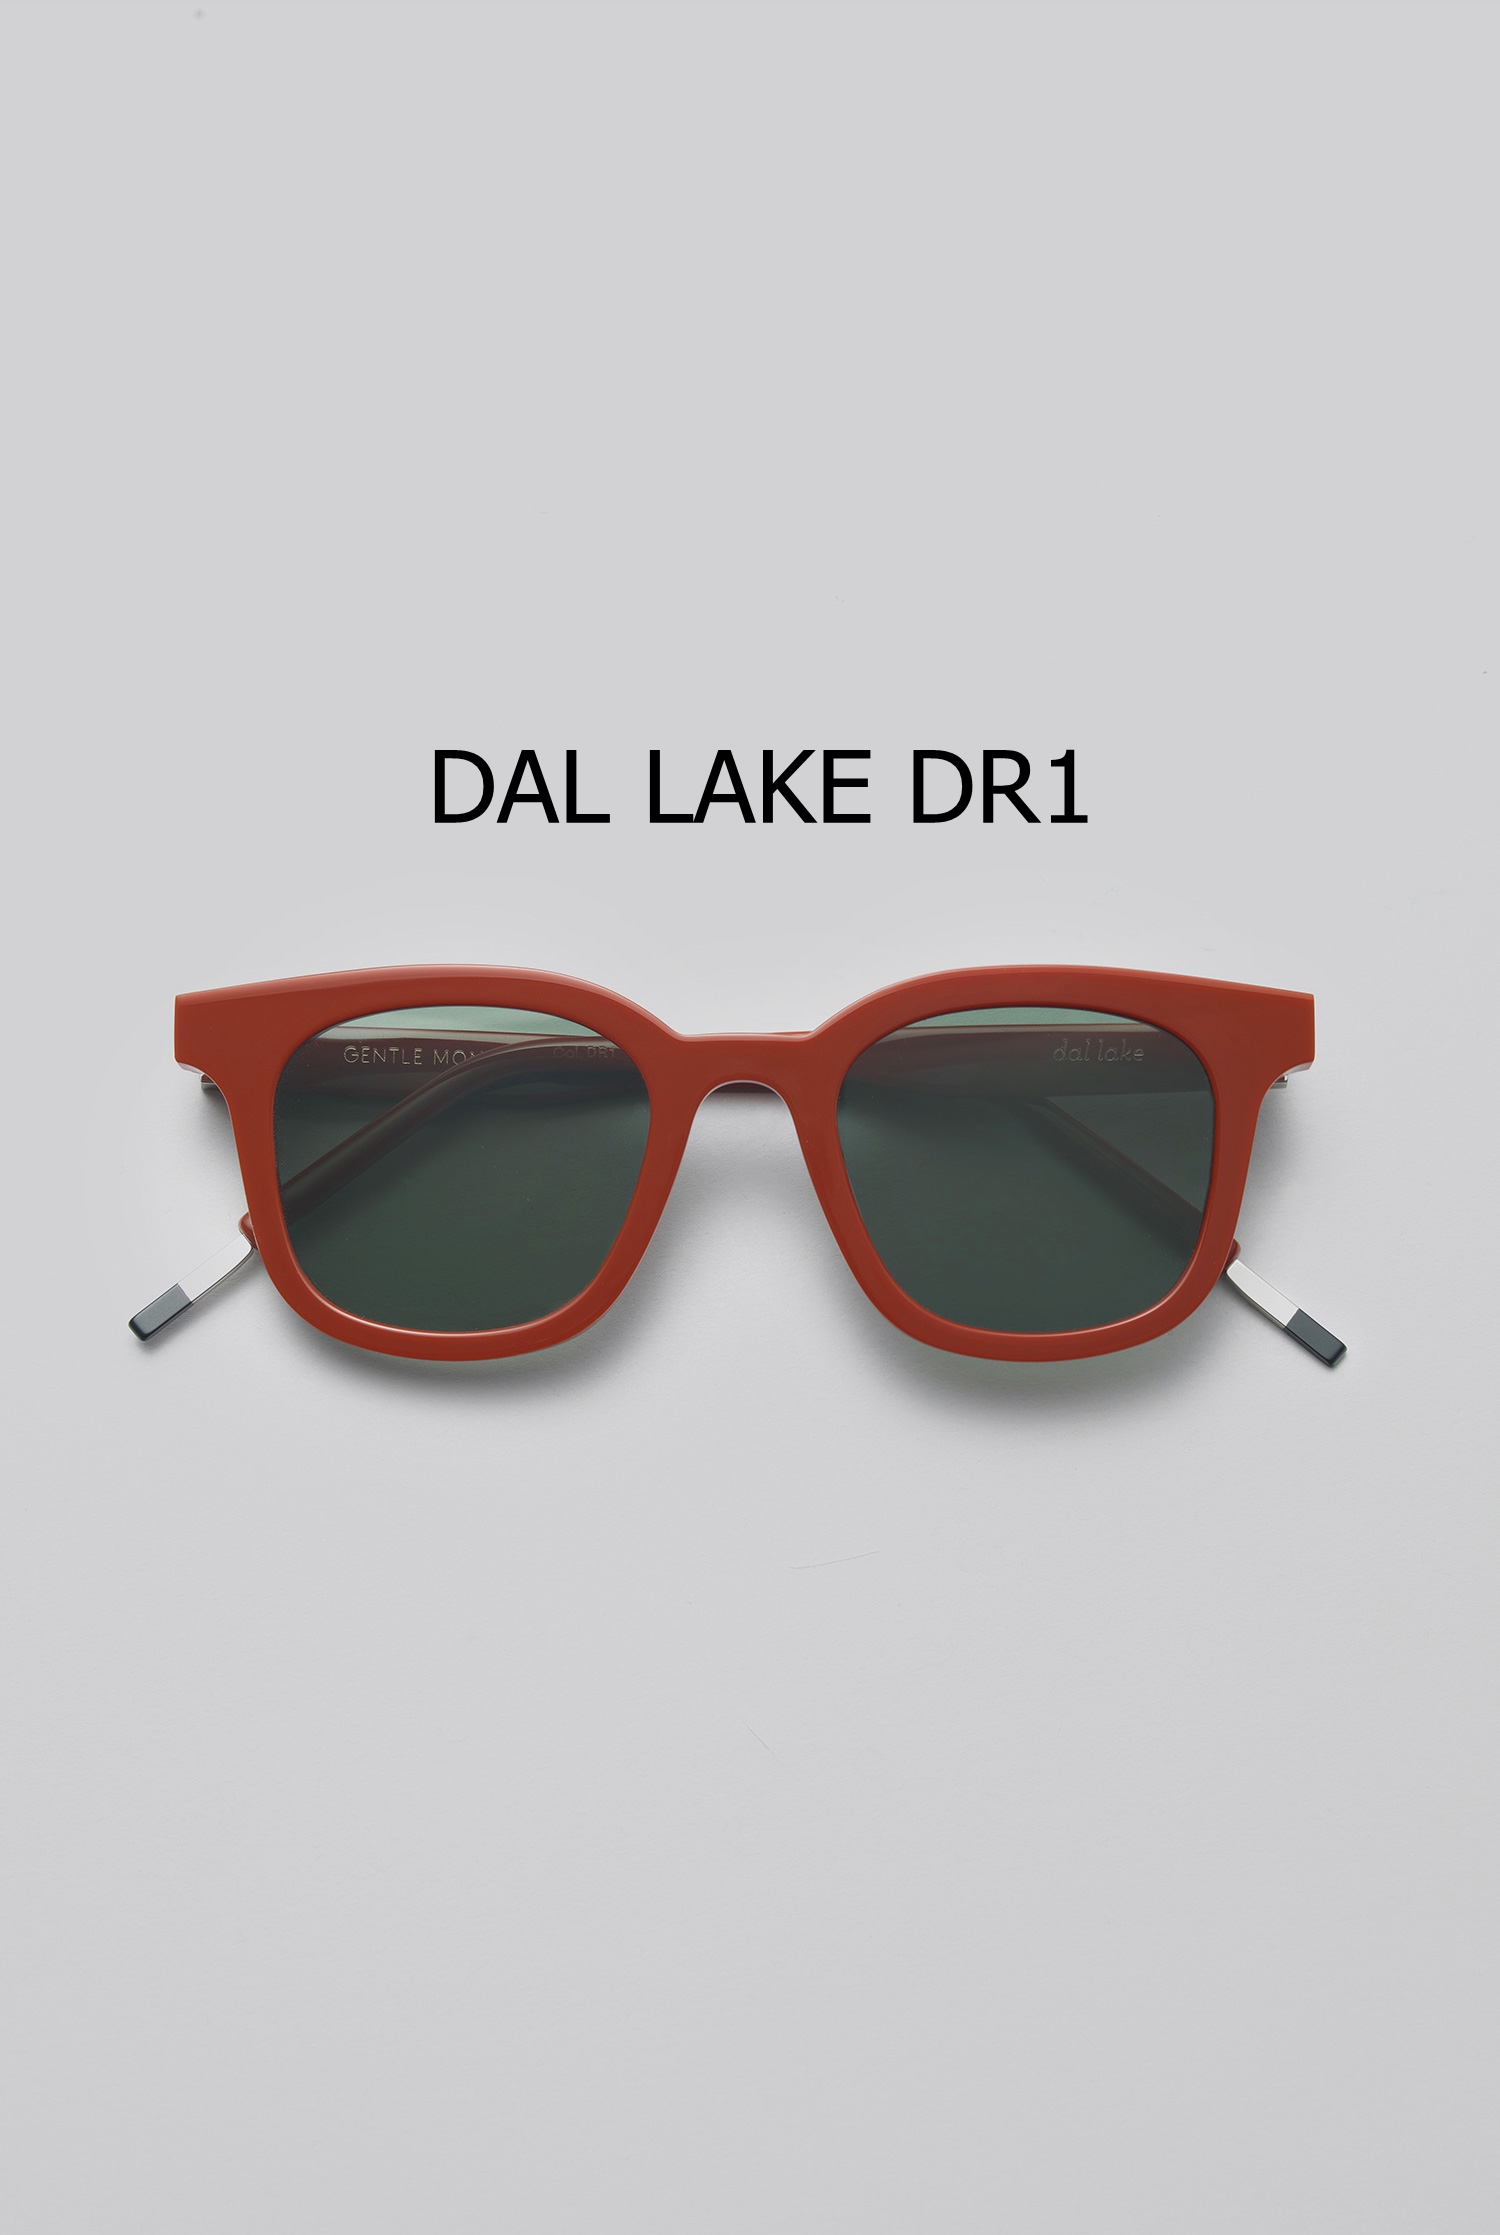 DAL LAKE DR1 